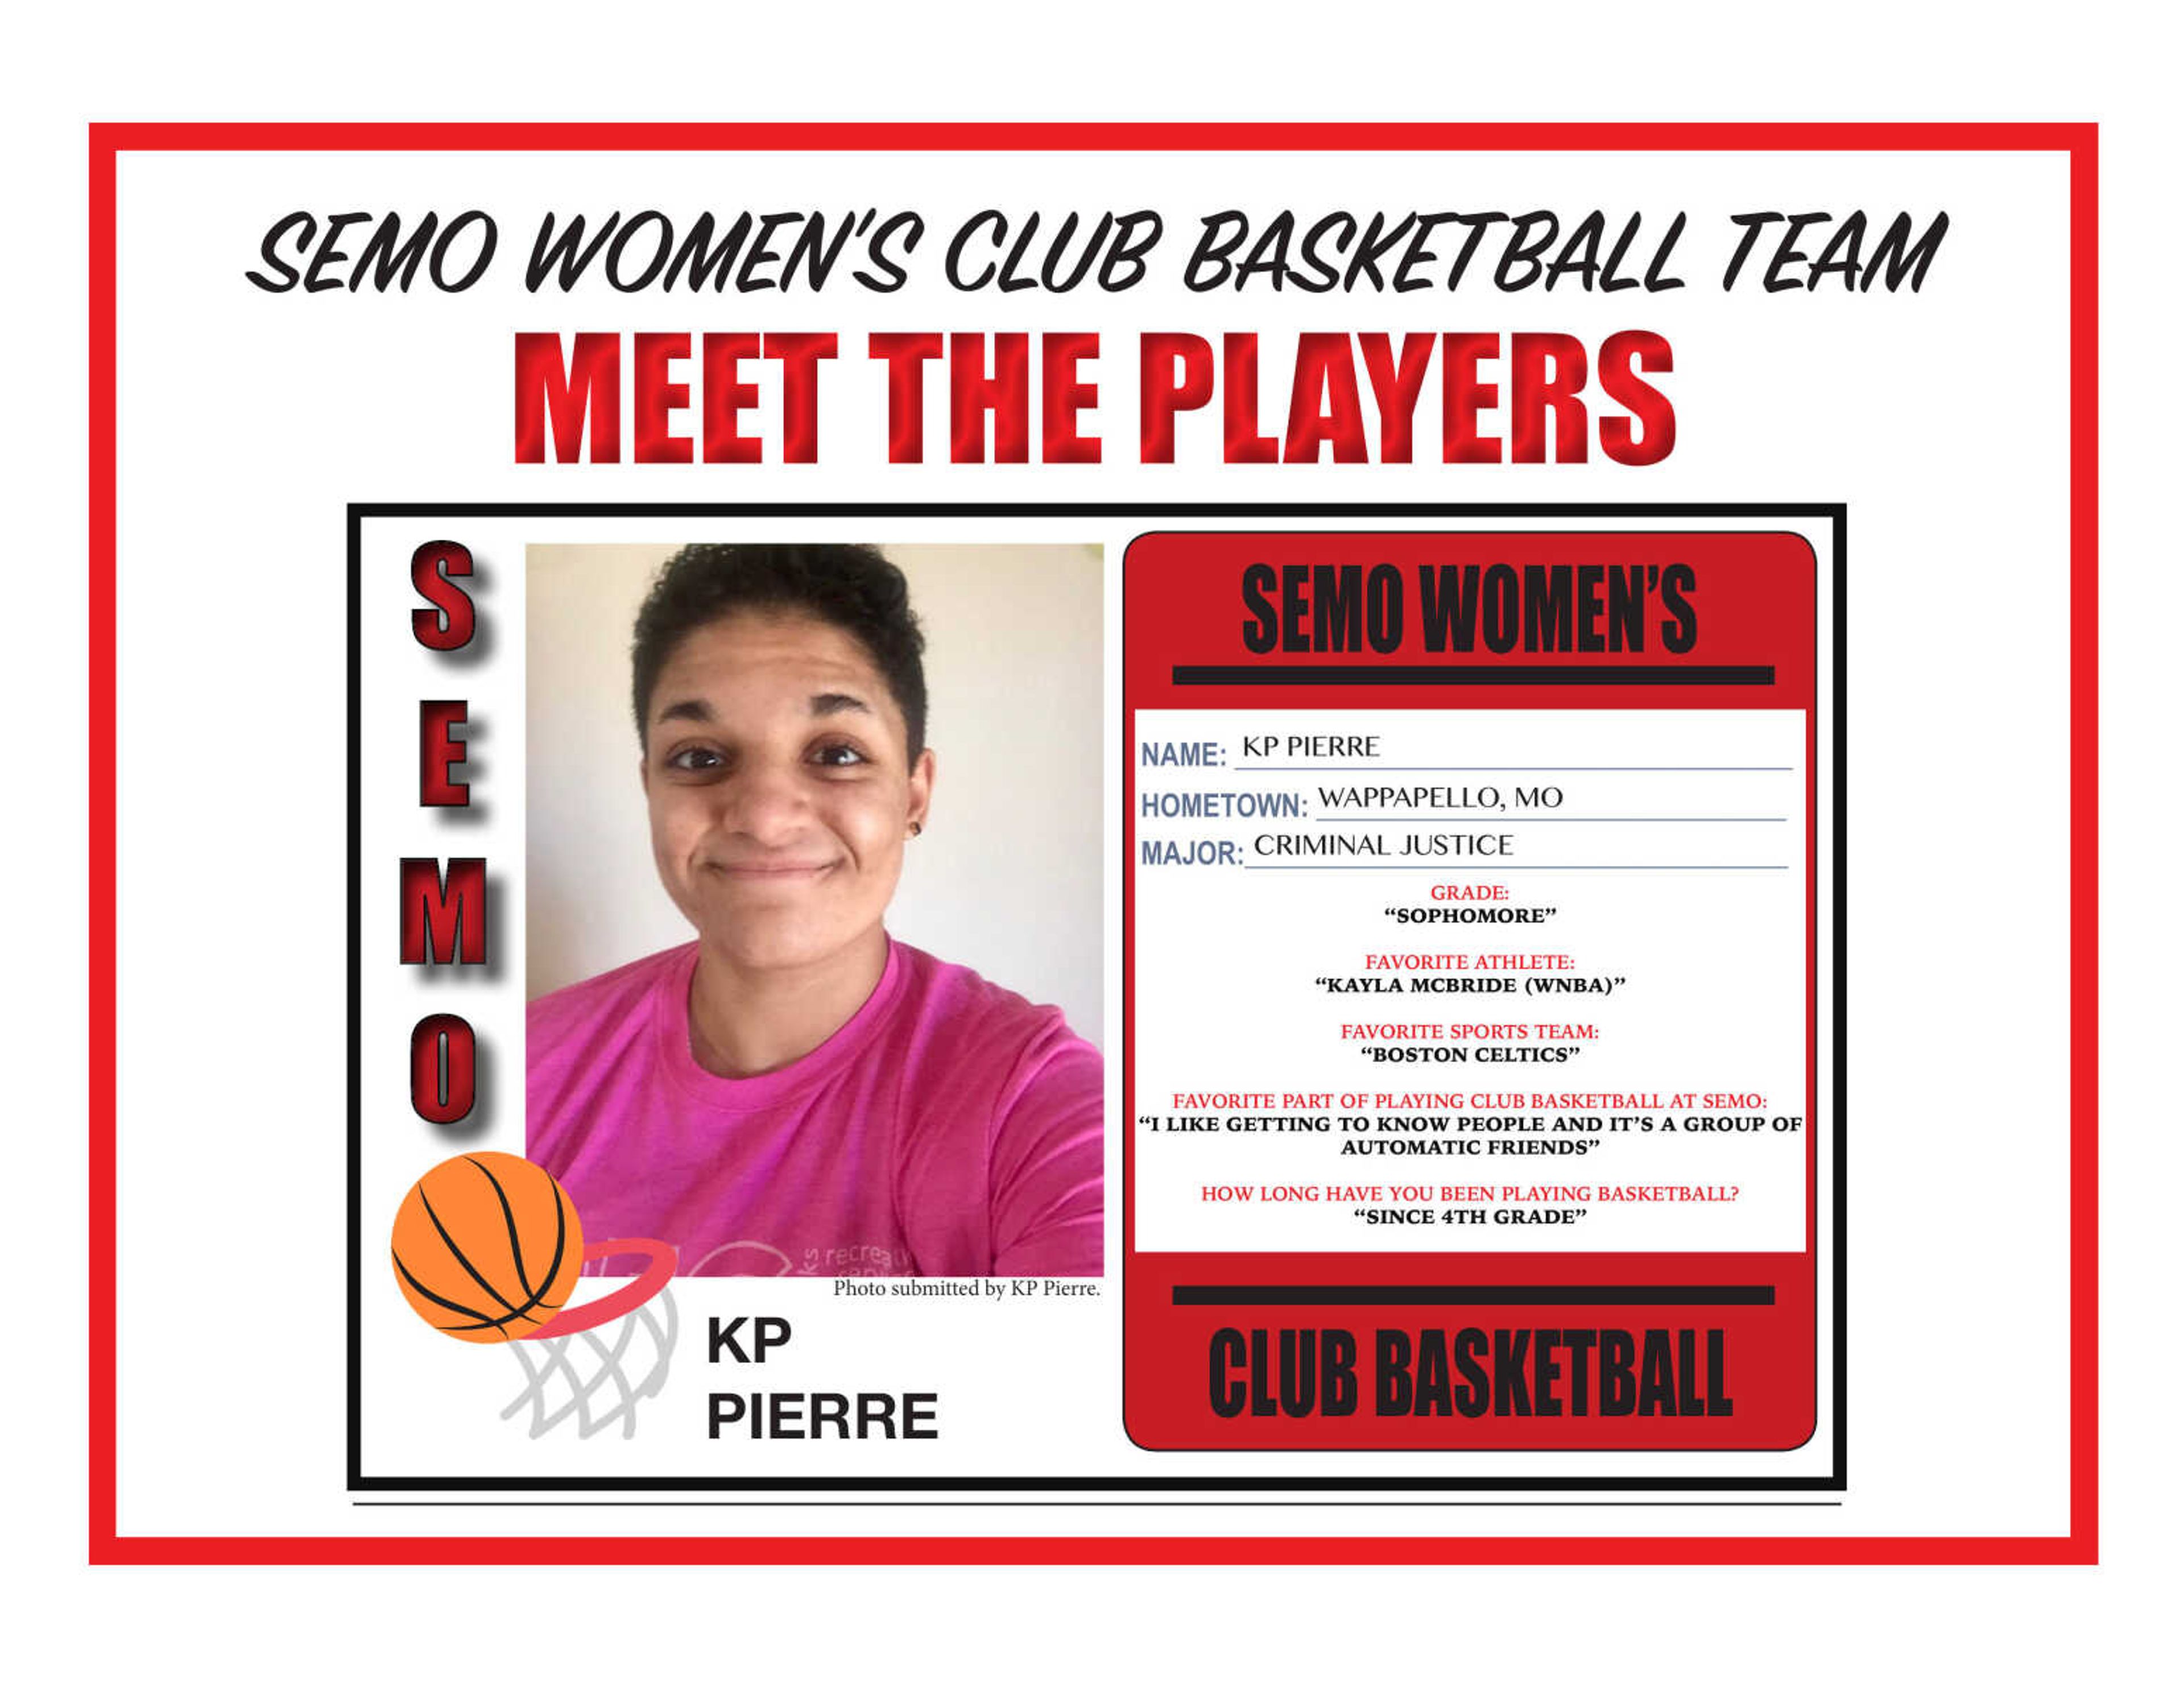 Club Sports debuts Women’s Club Basketball Team this semester